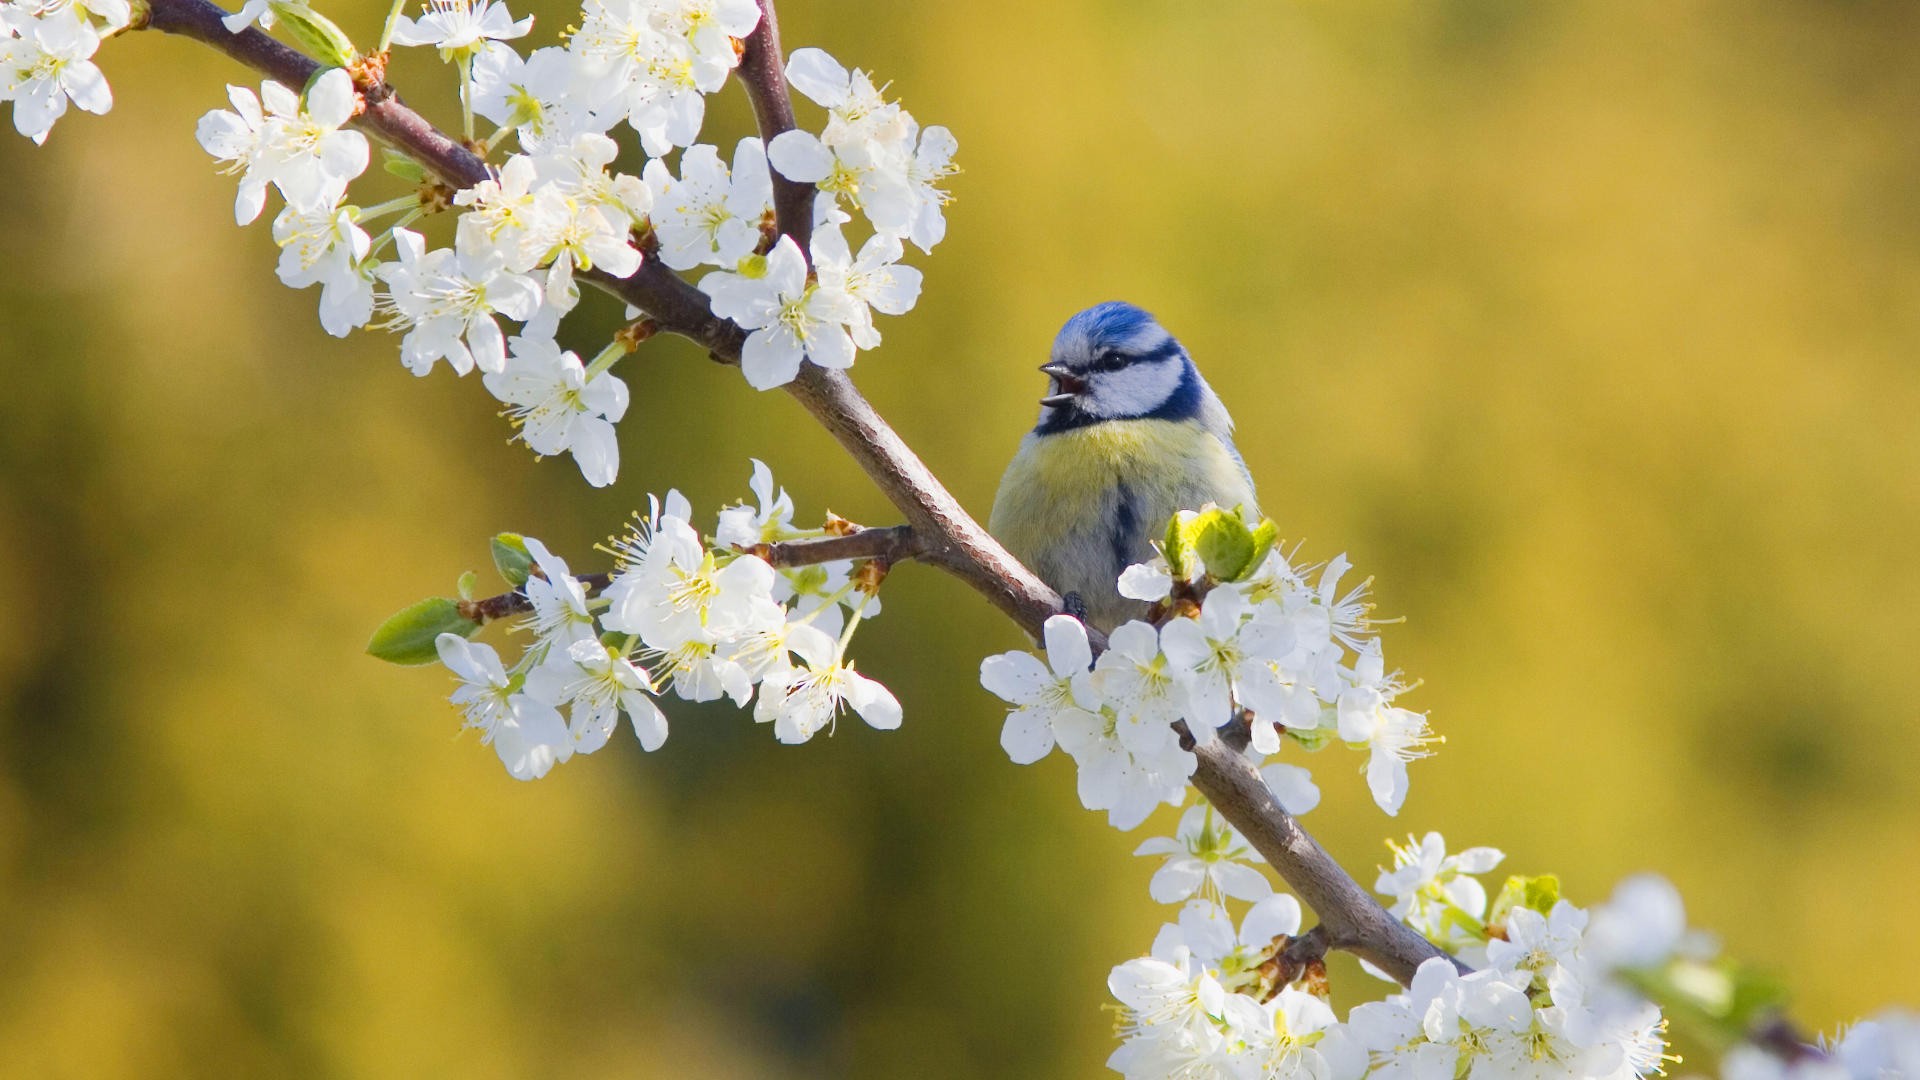 nature, birds, blue tit, white flowers, blurred background - desktop wallpaper